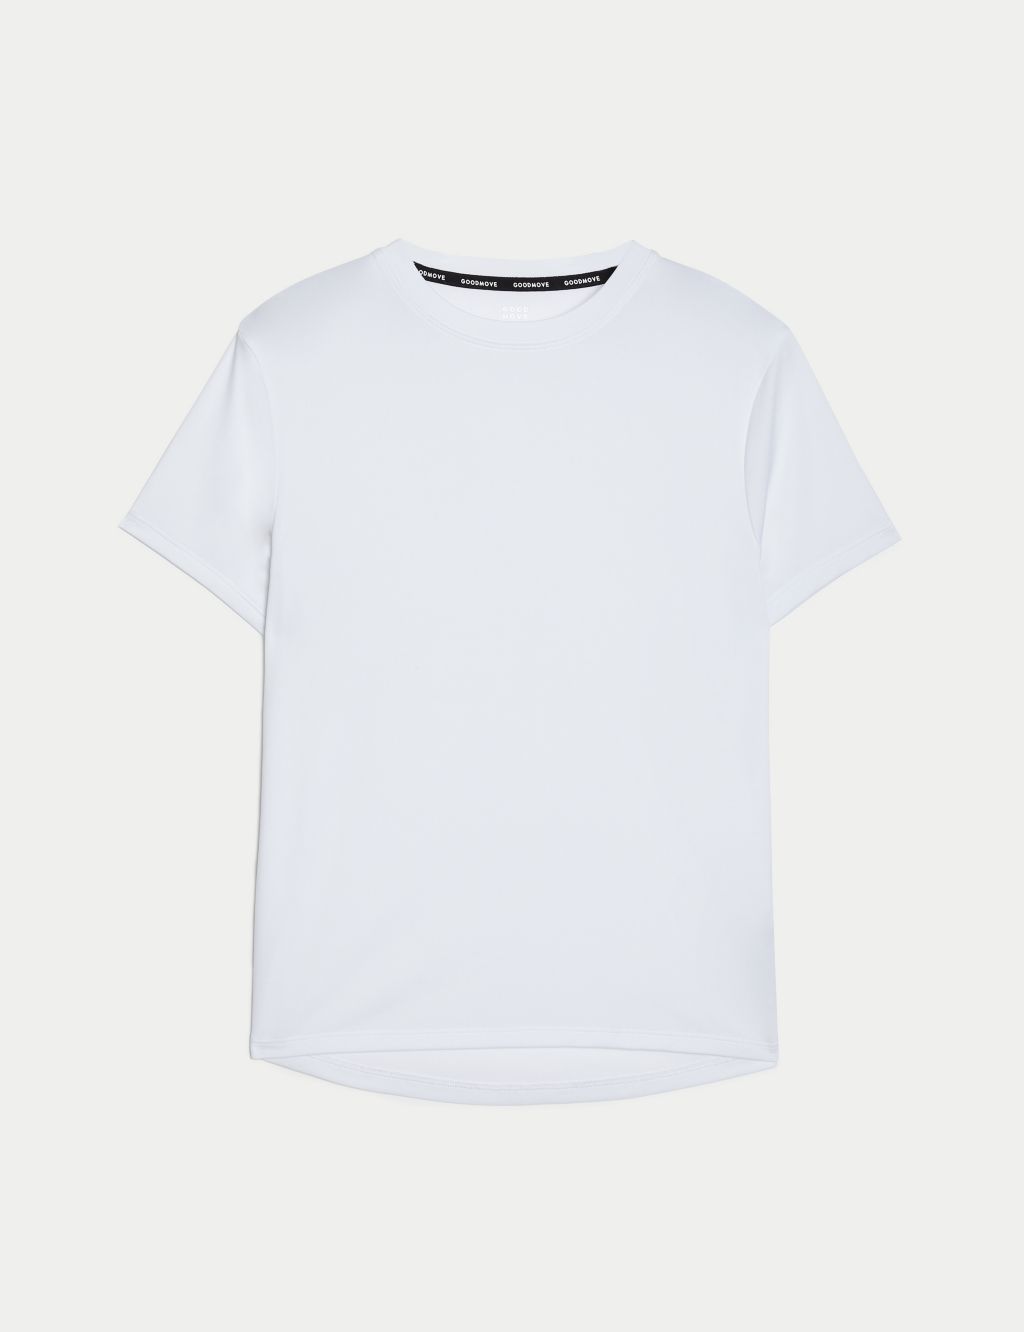 Unisex Sports T-Shirt (6-16 Yrs) image 1